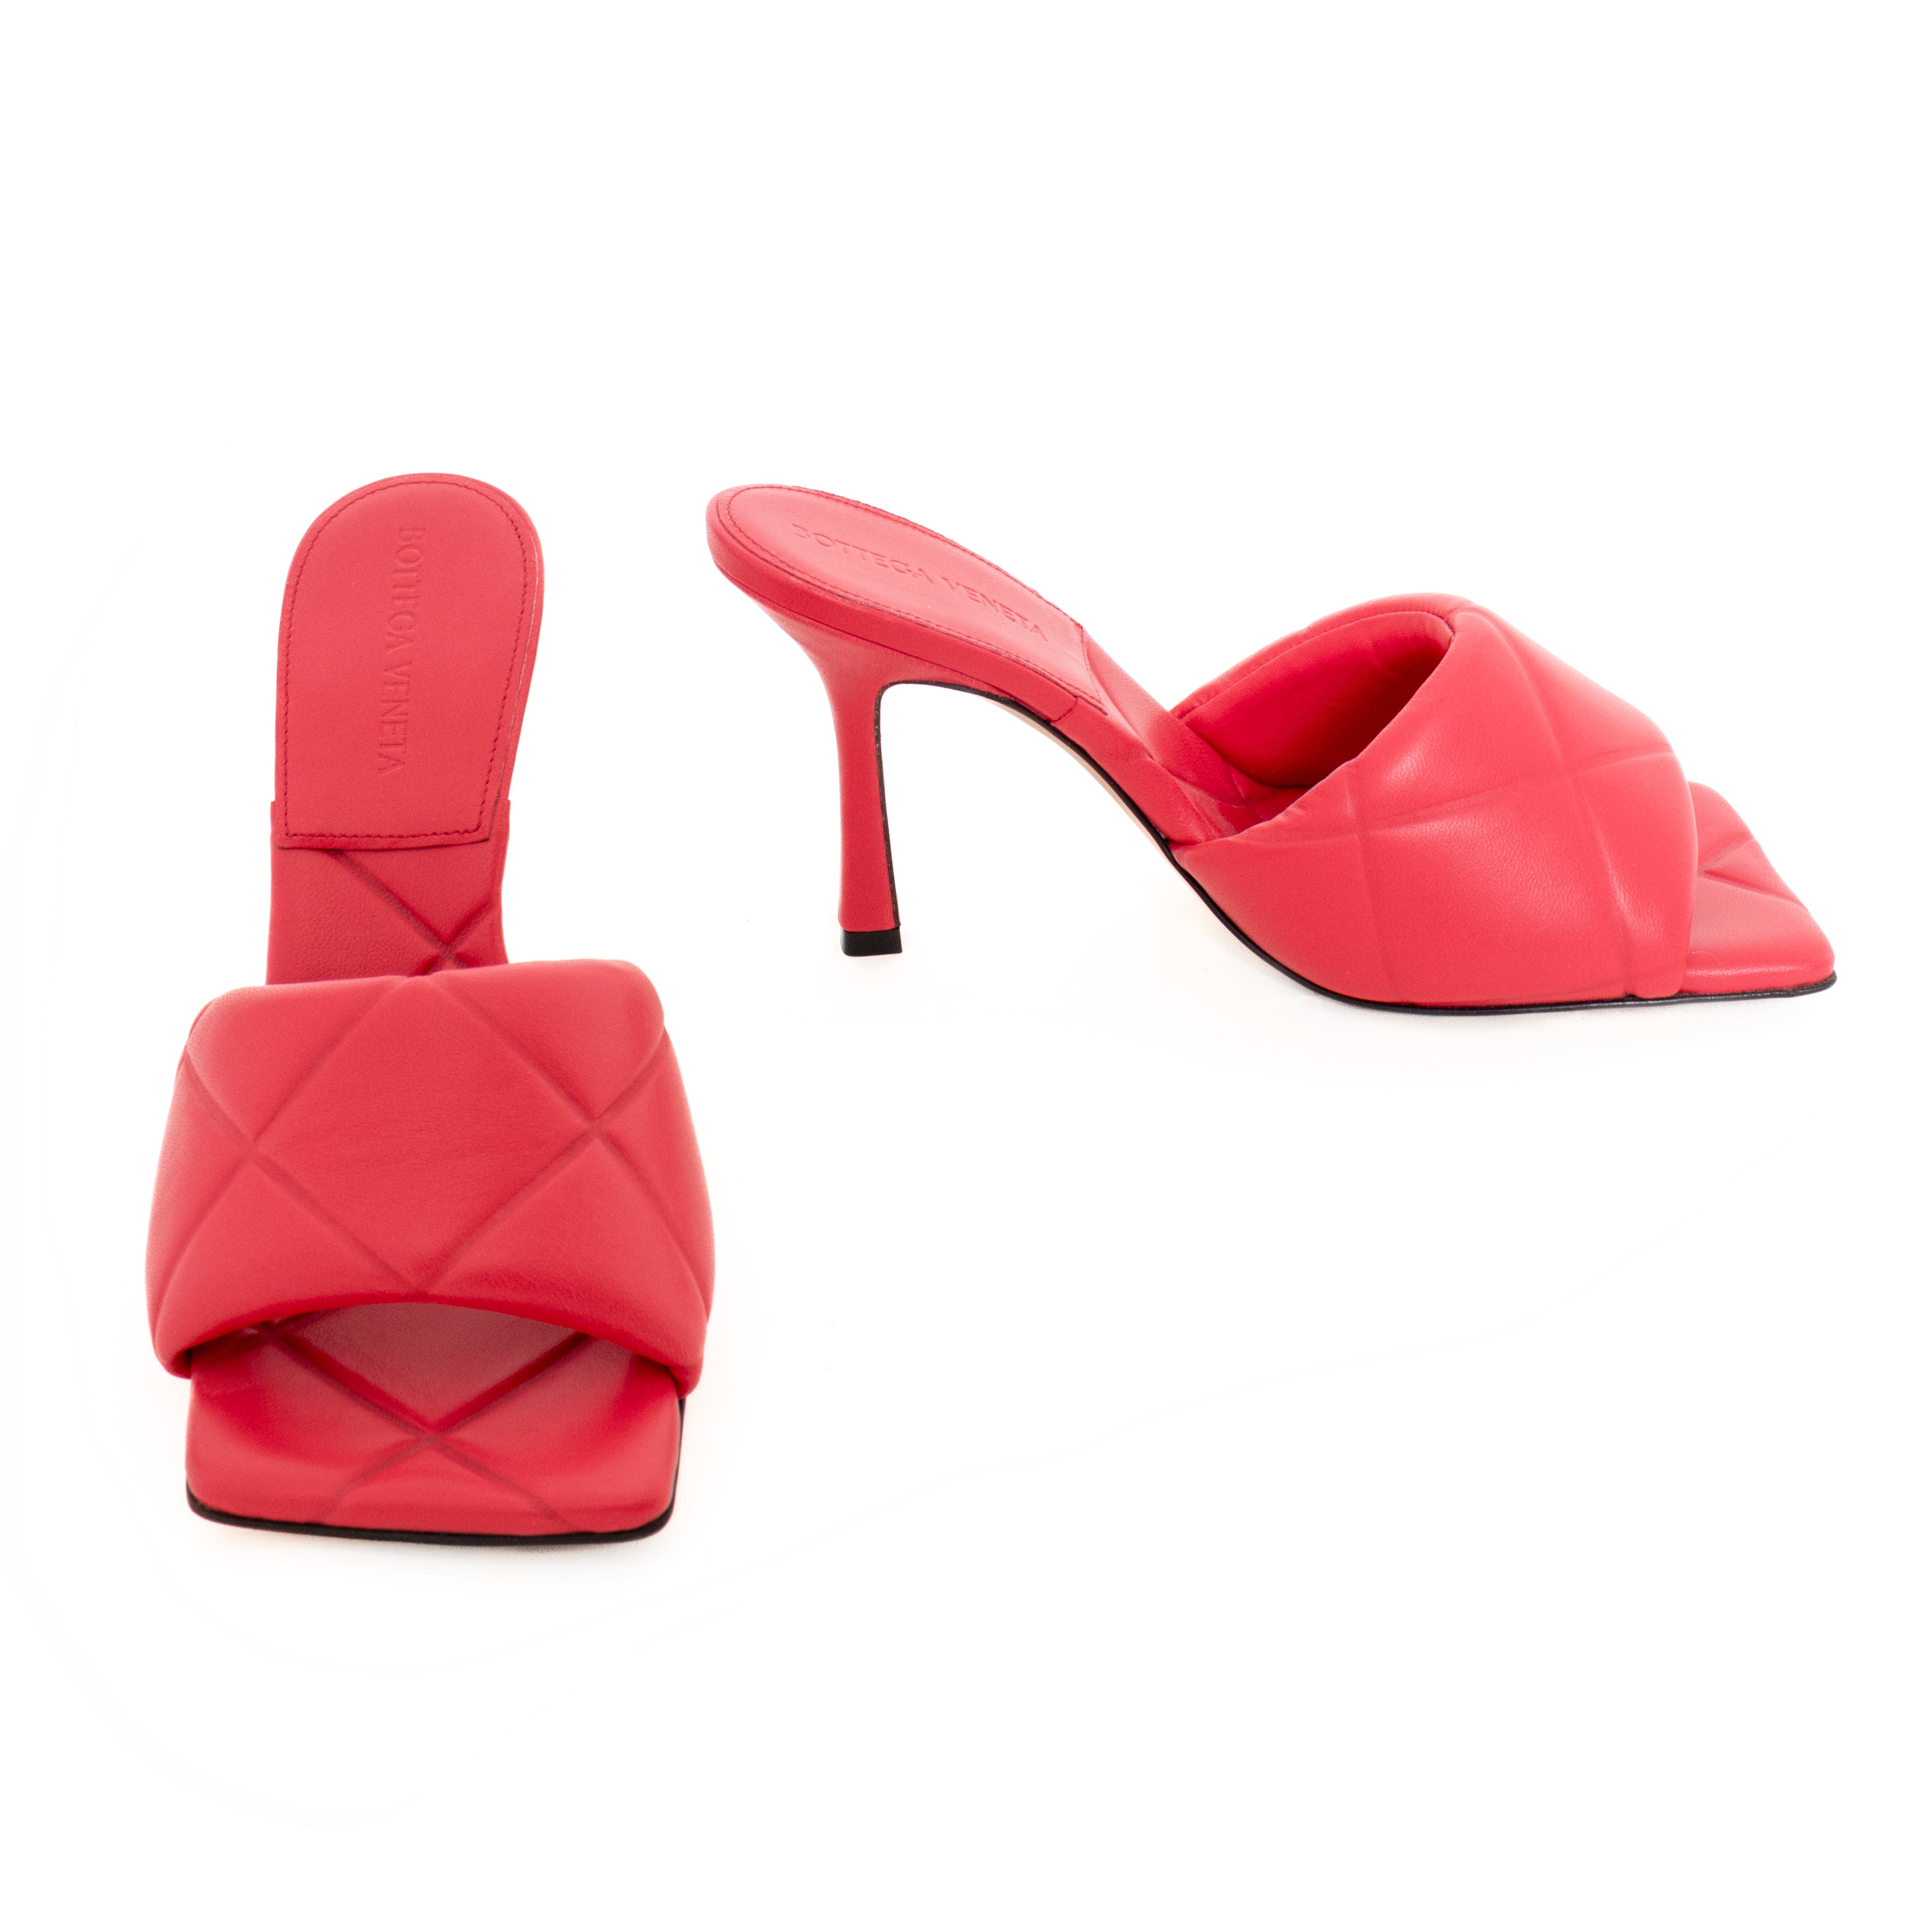 Louis Vuitton open toe red heels size: 37 1/2